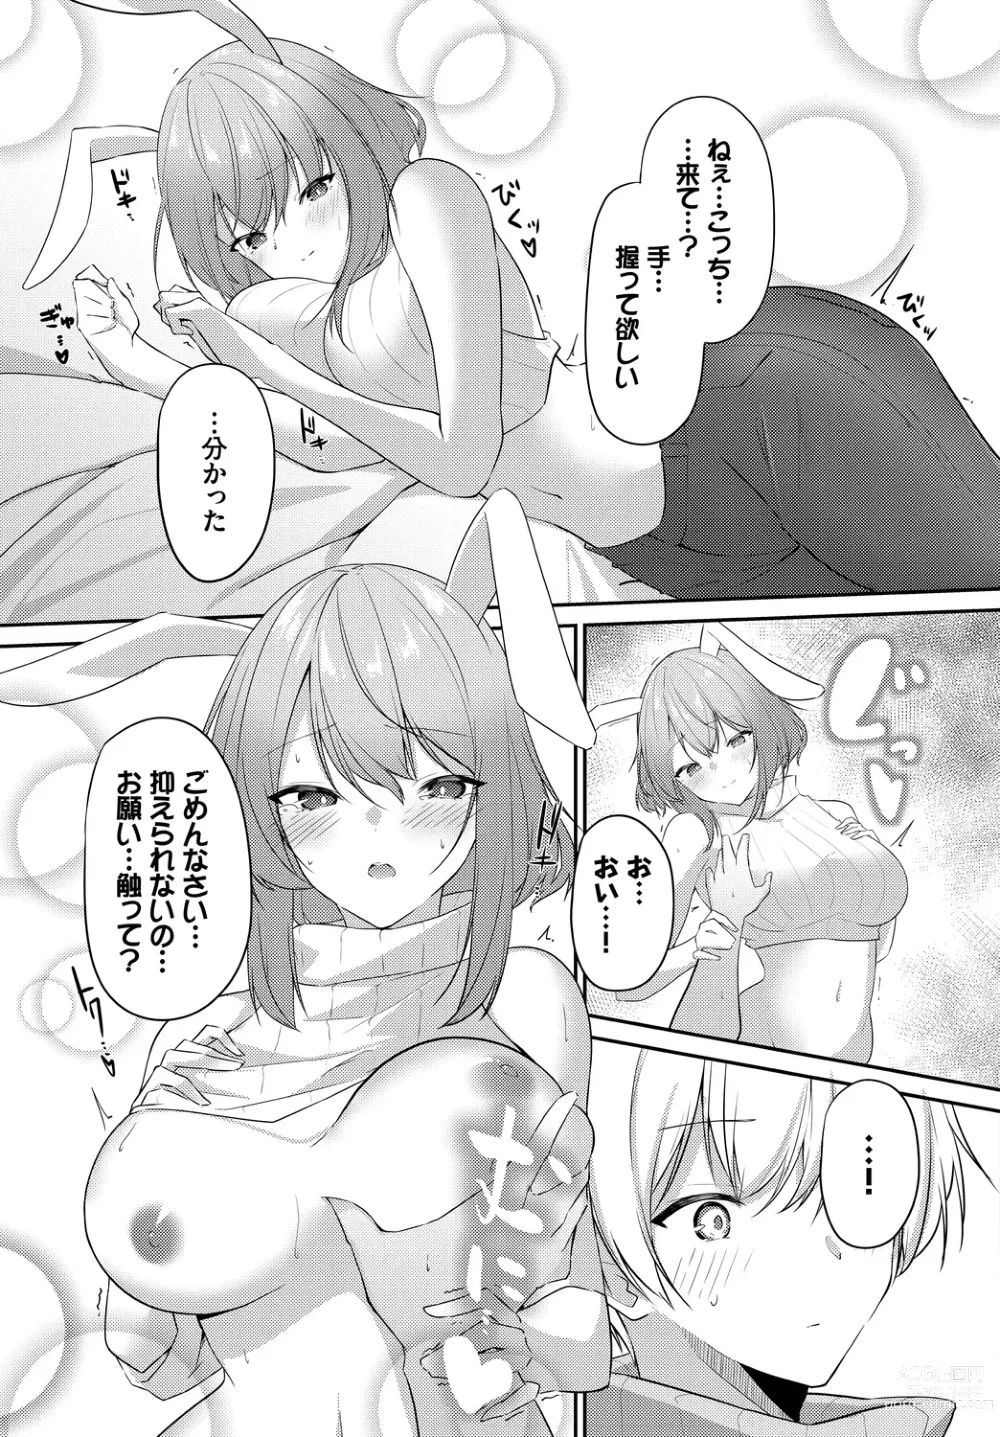 Page 149 of manga Meikyuu Lilac - Laberynth Lilac.